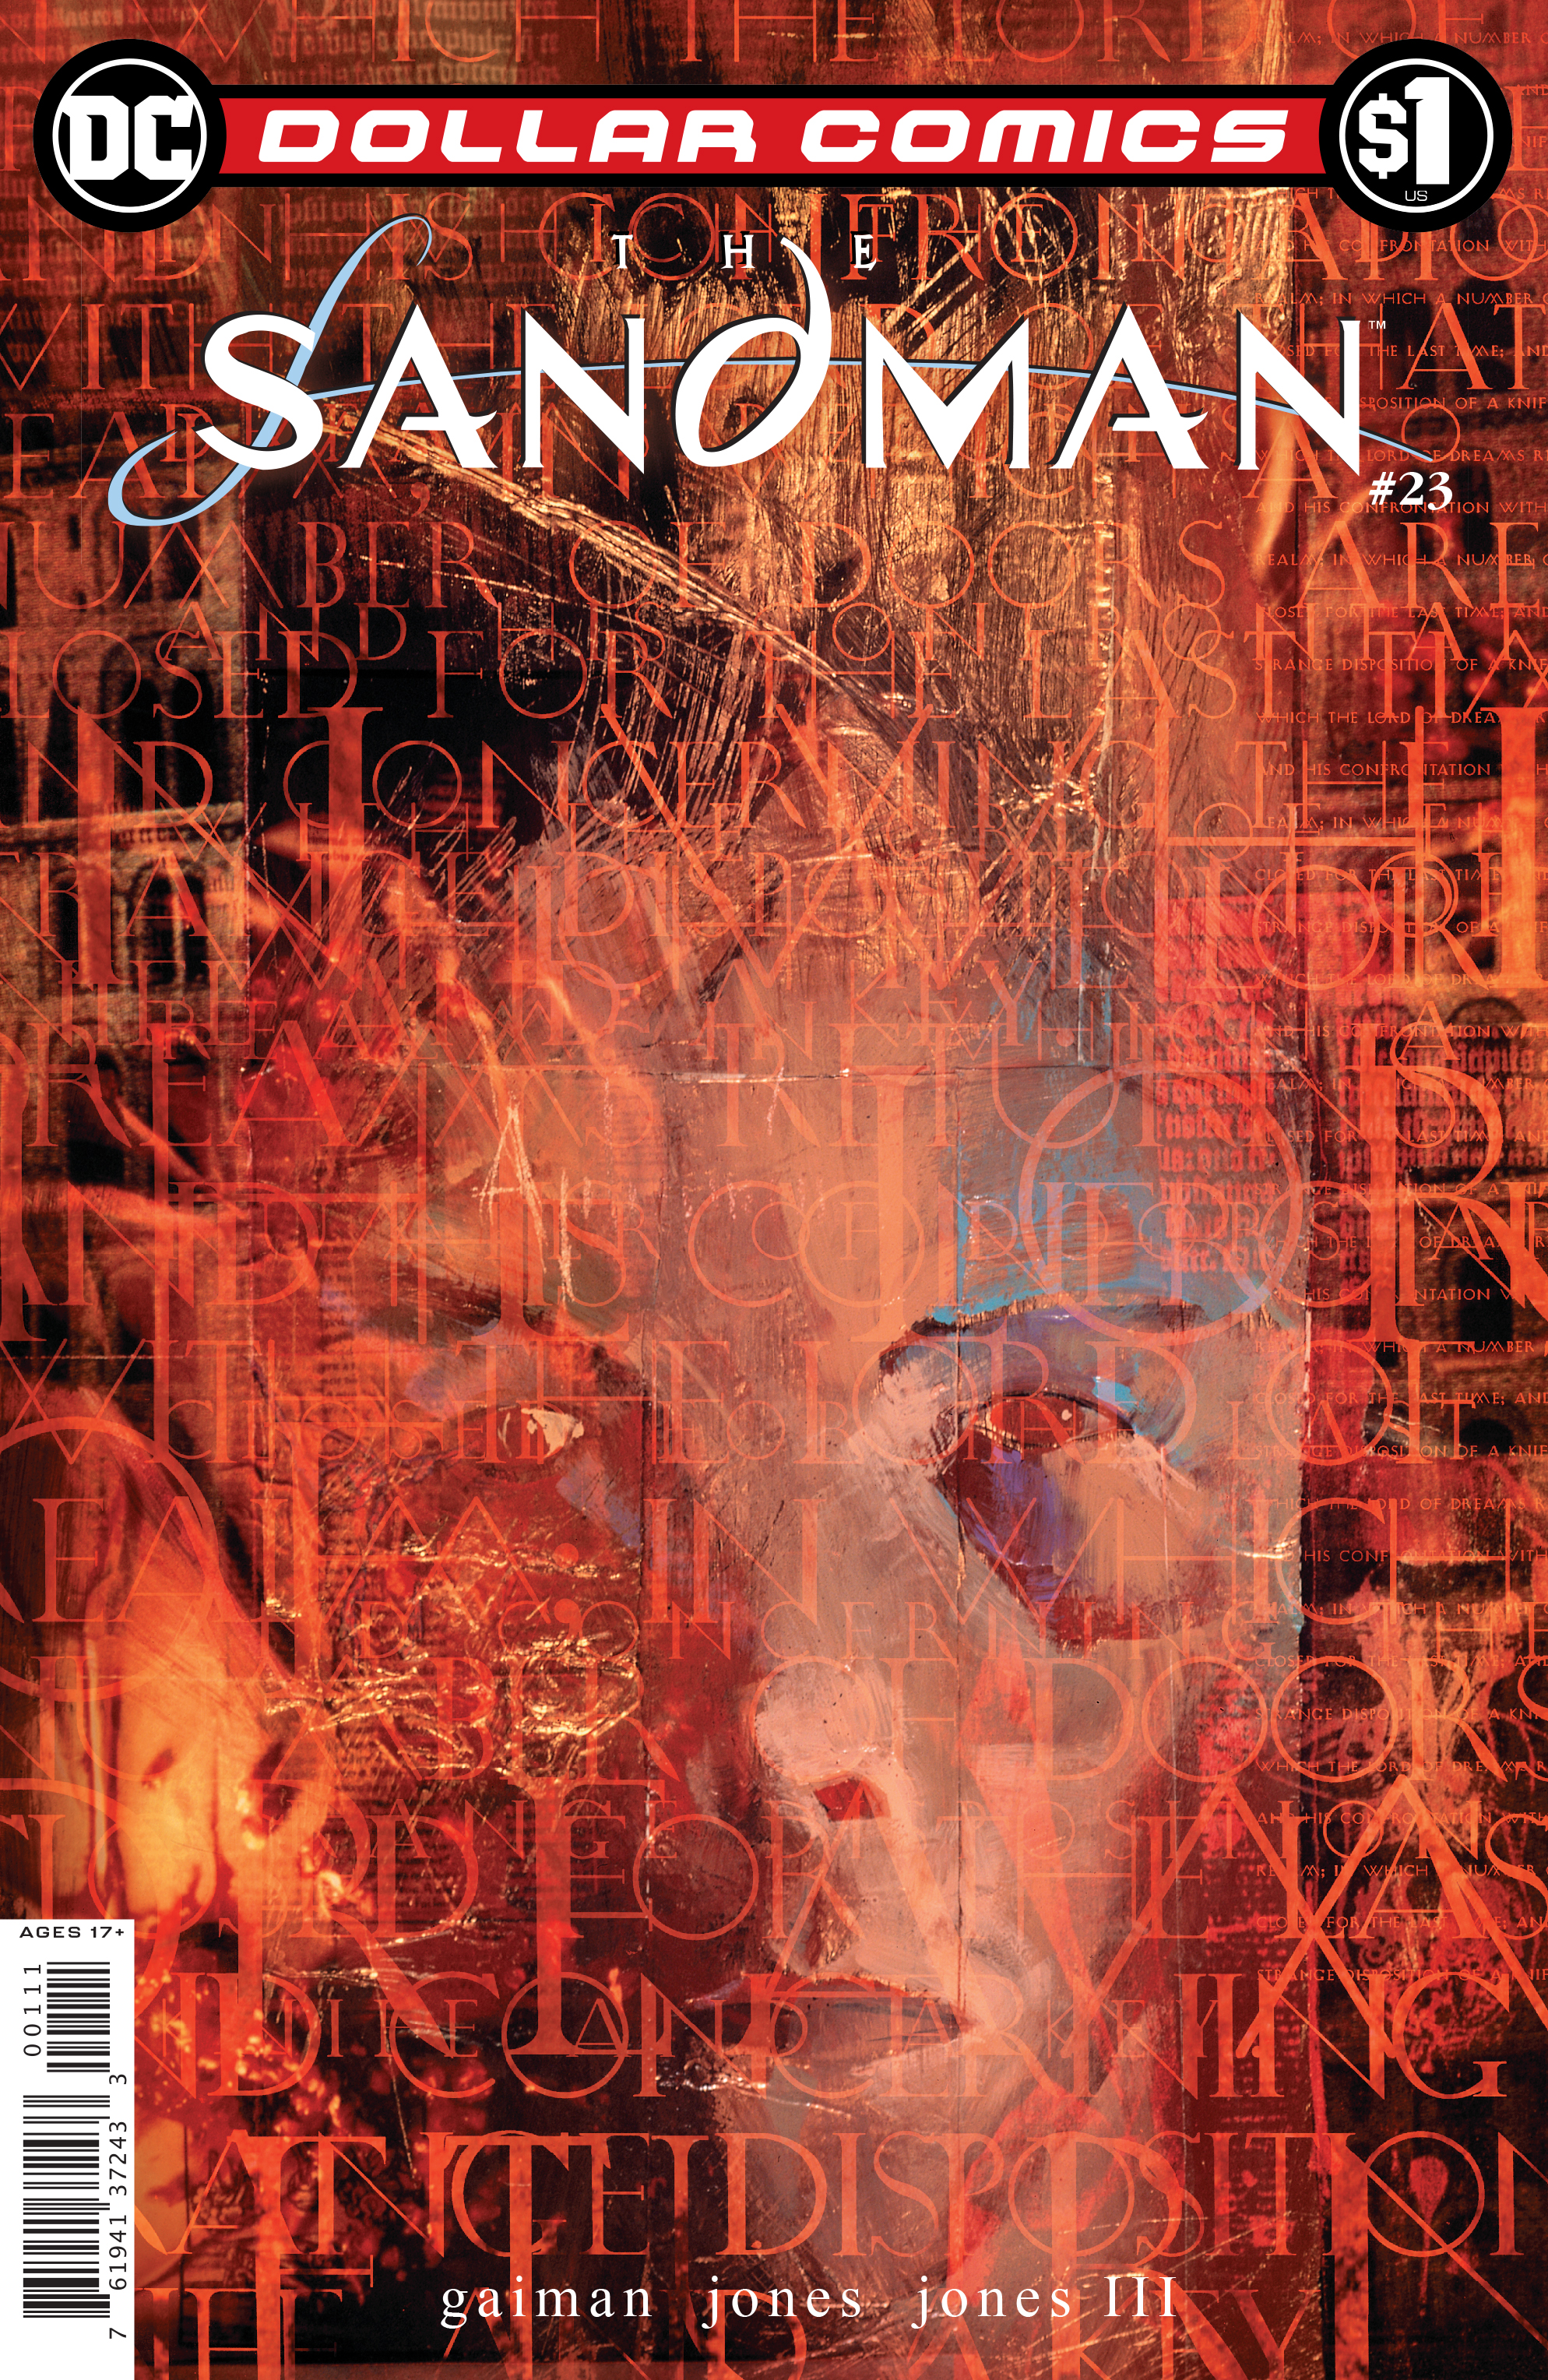 Dollar Comics The Sandman #23 (Mature)